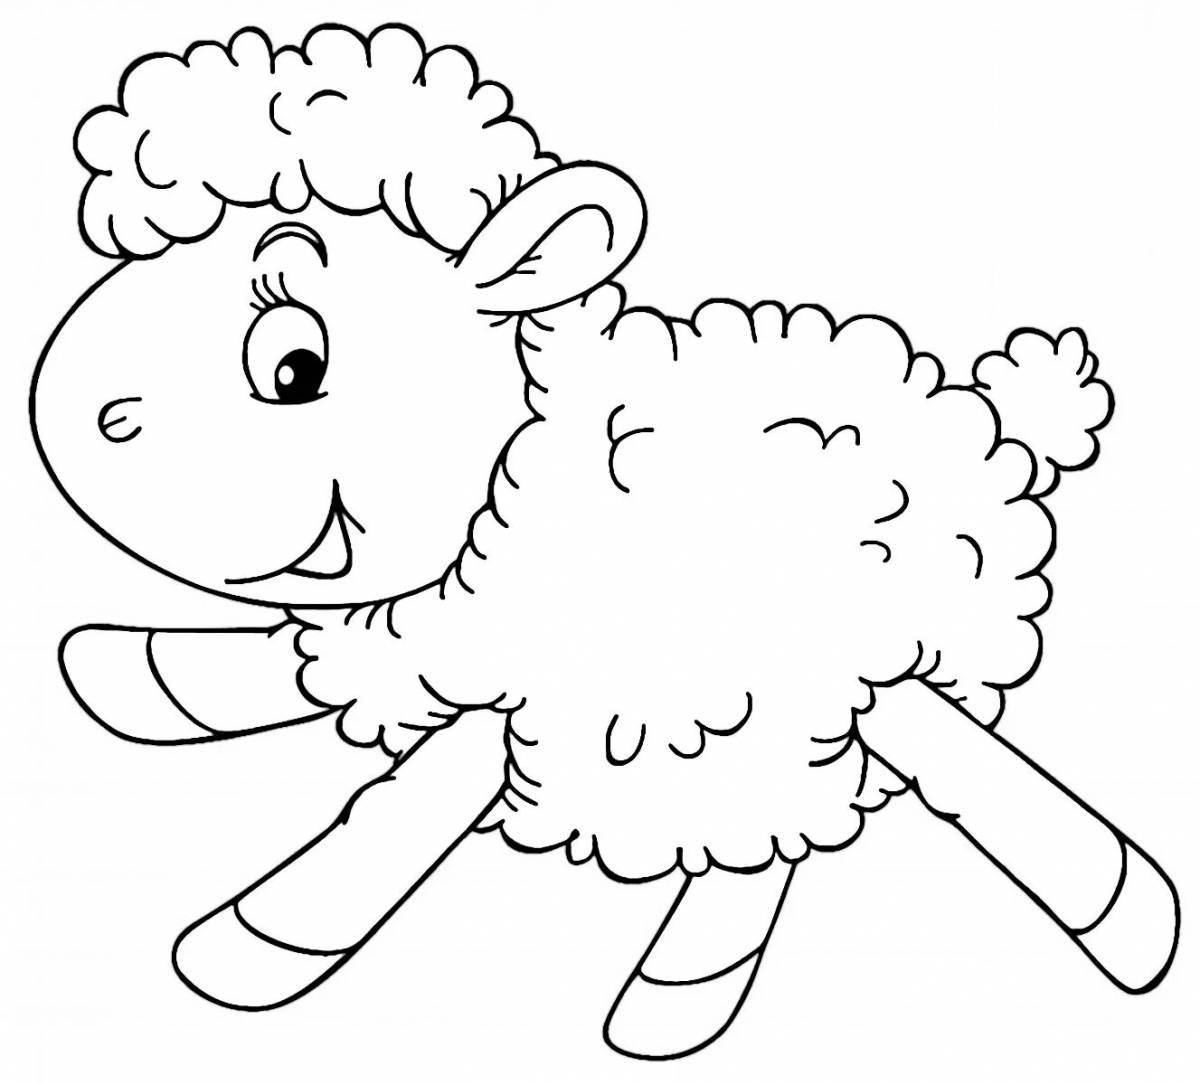 Fancy lamb coloring